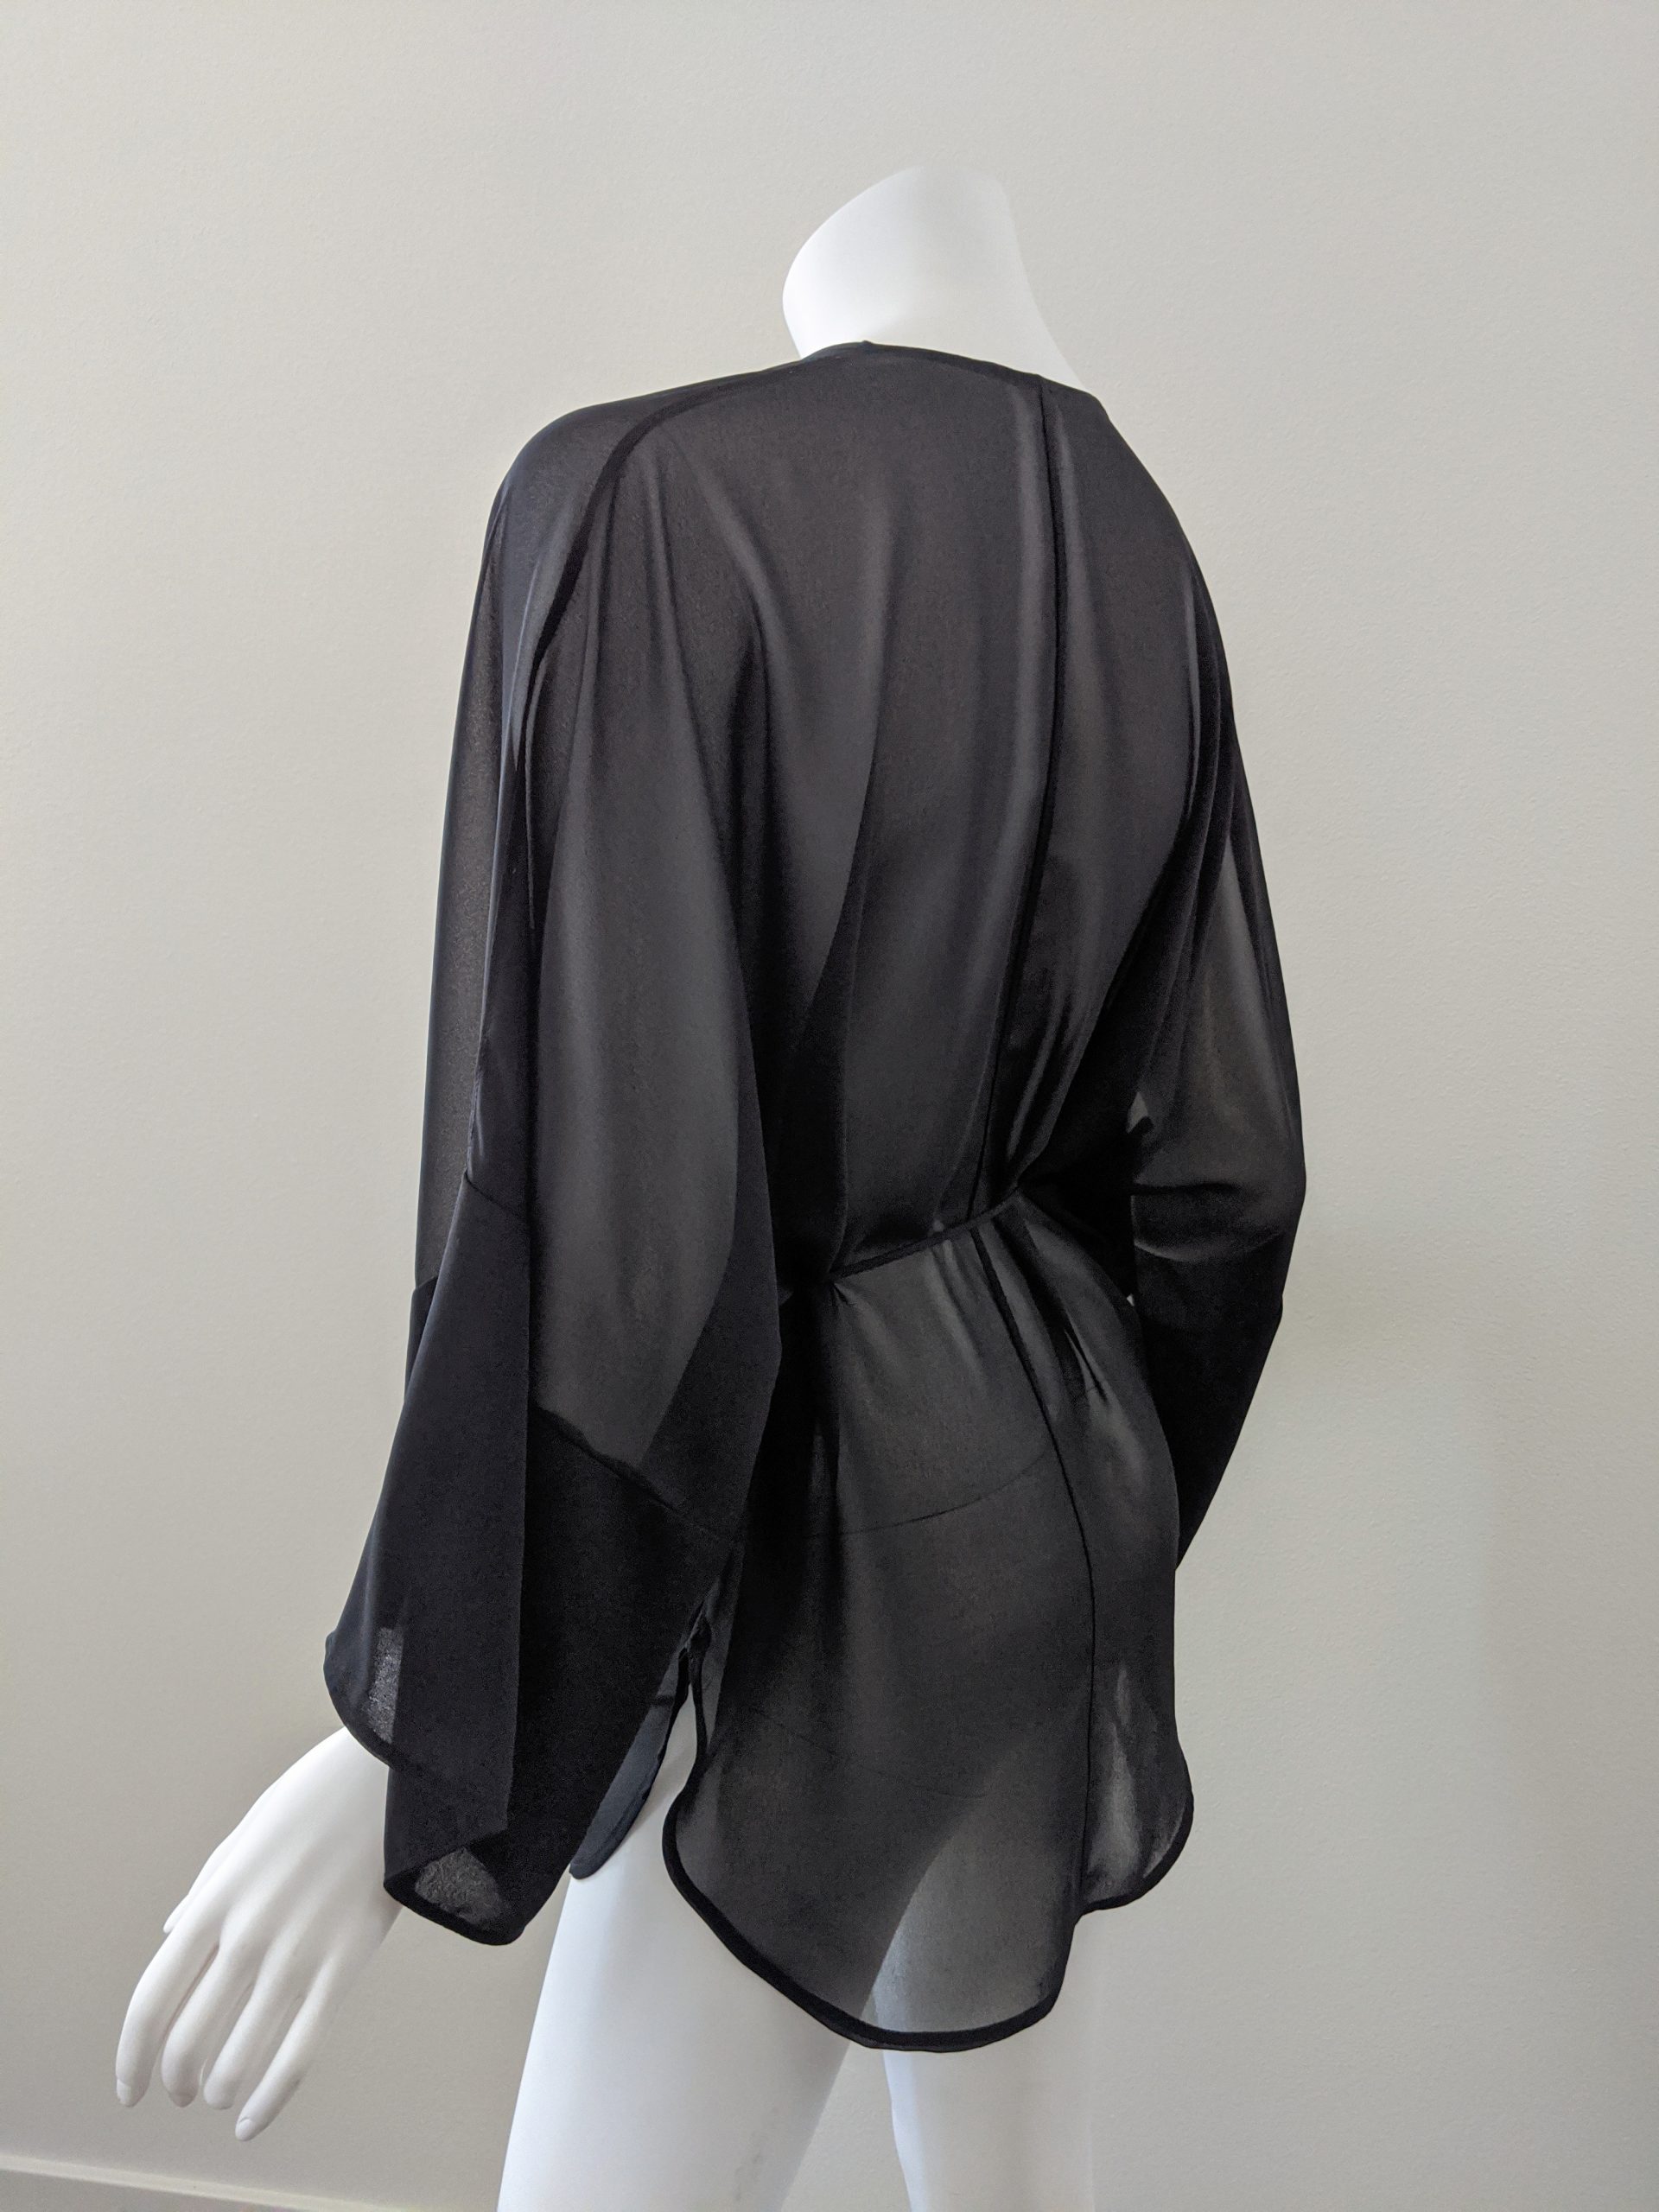 Black Sheer Robe Kimono Cover Up Handmade Sheer Shawl